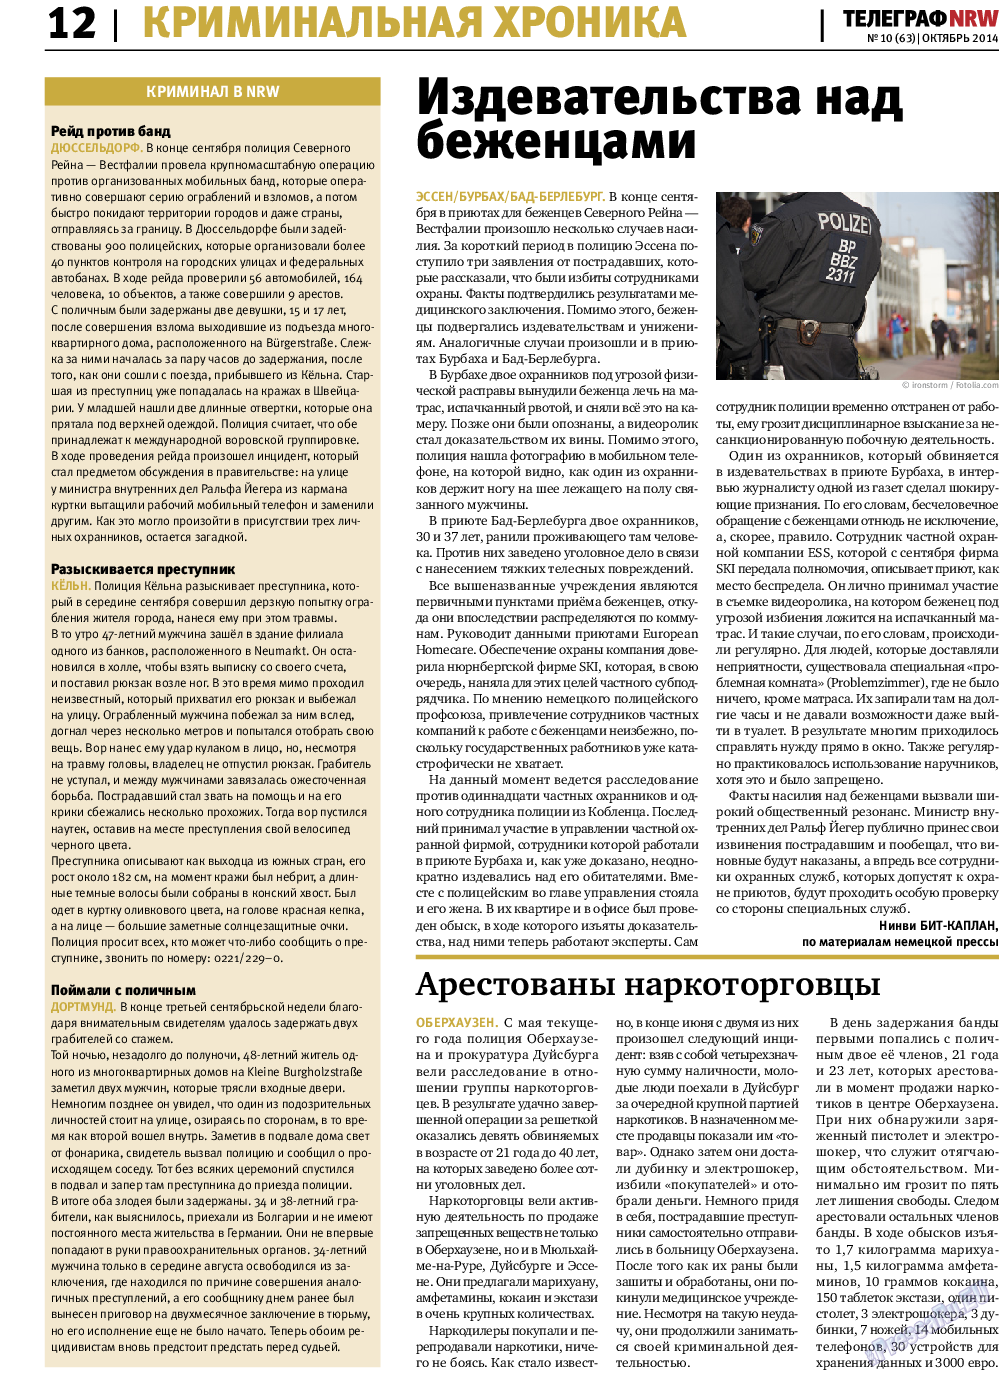 Телеграф NRW, газета. 2014 №10 стр.12